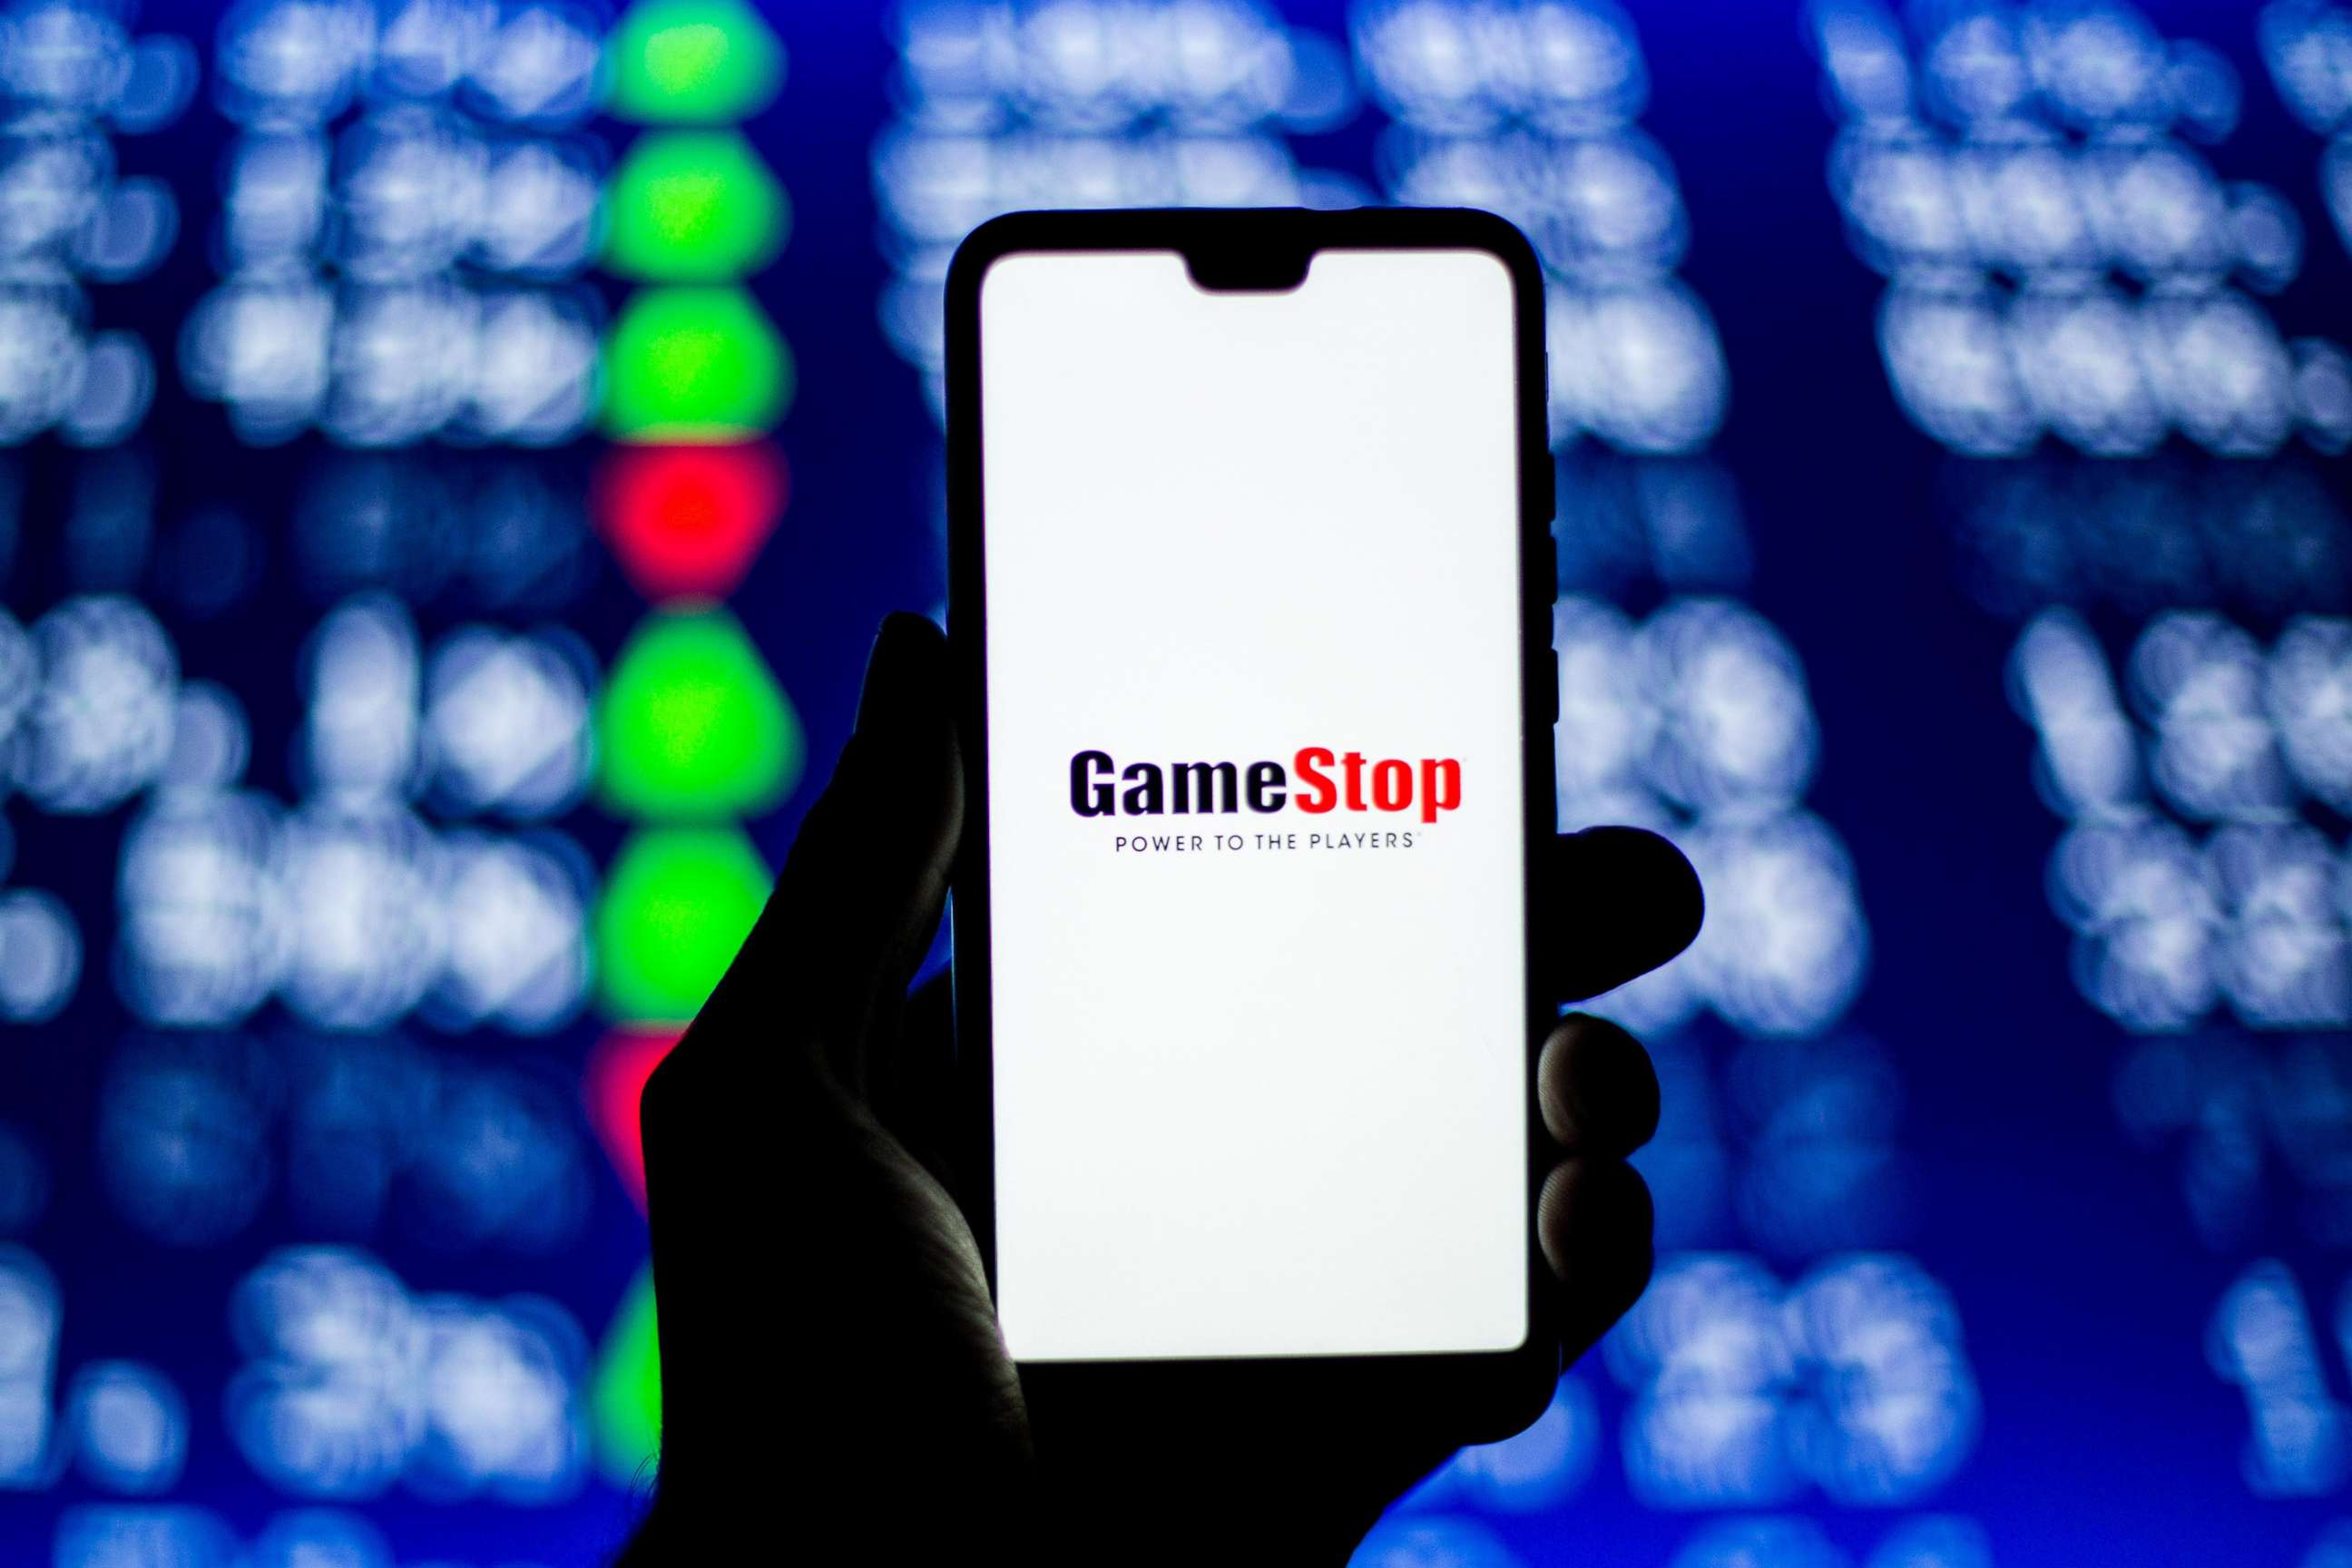 PHOTO: Illustration a GameStop logo on a smartphone.